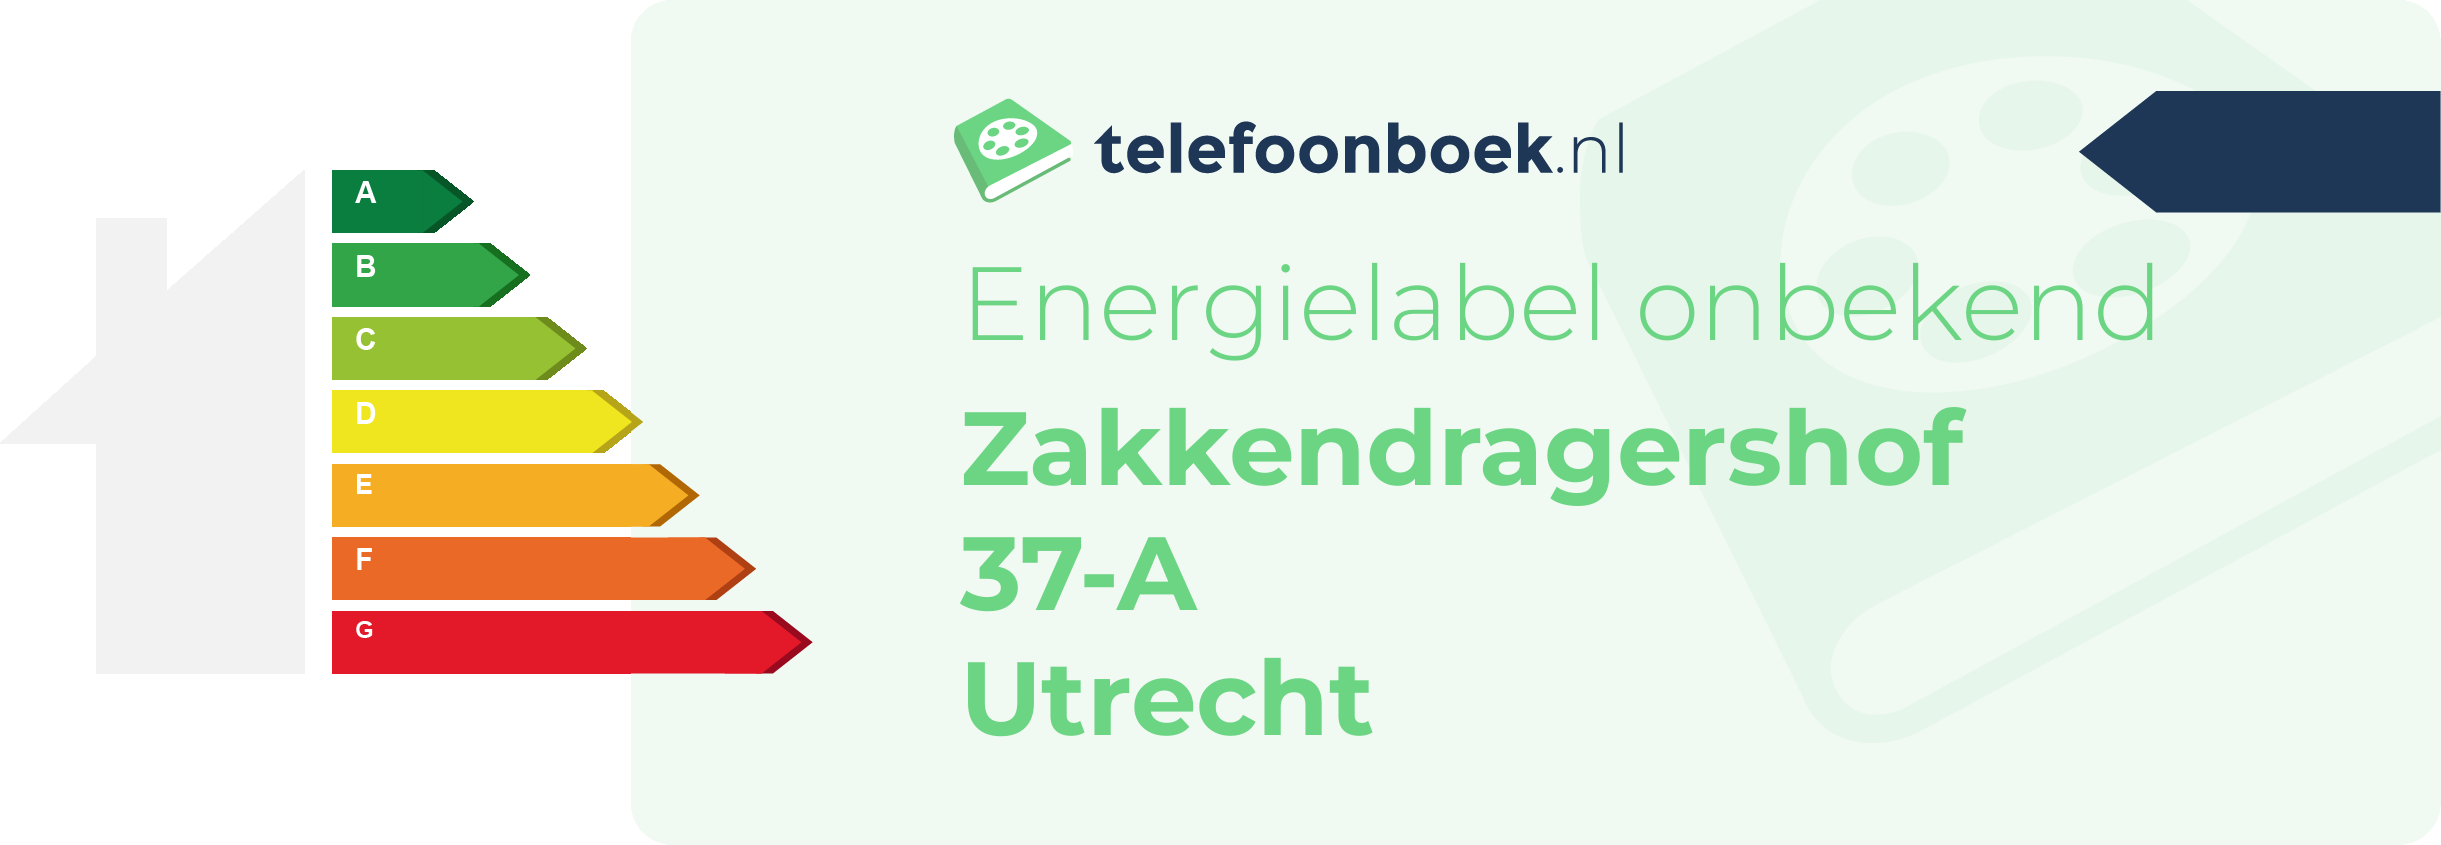 Energielabel Zakkendragershof 37-A Utrecht